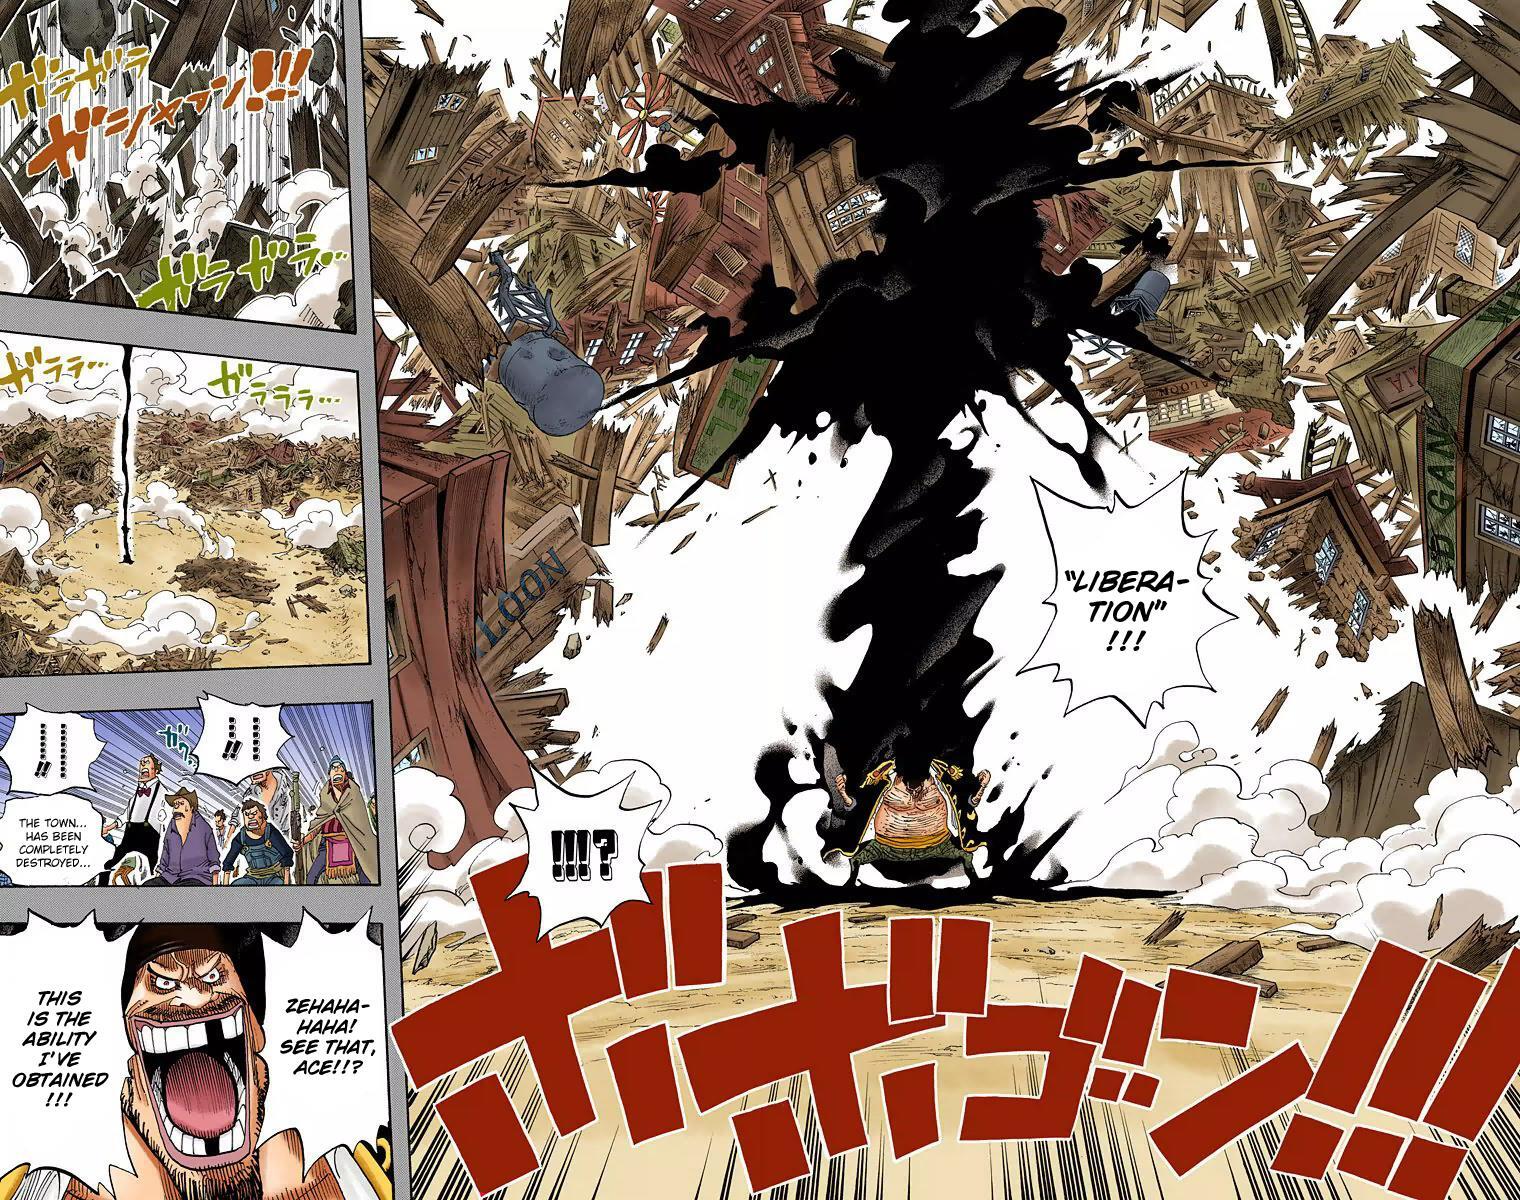 Yami Yami no Mi, One Piece: Final Chapter 2 Wiki